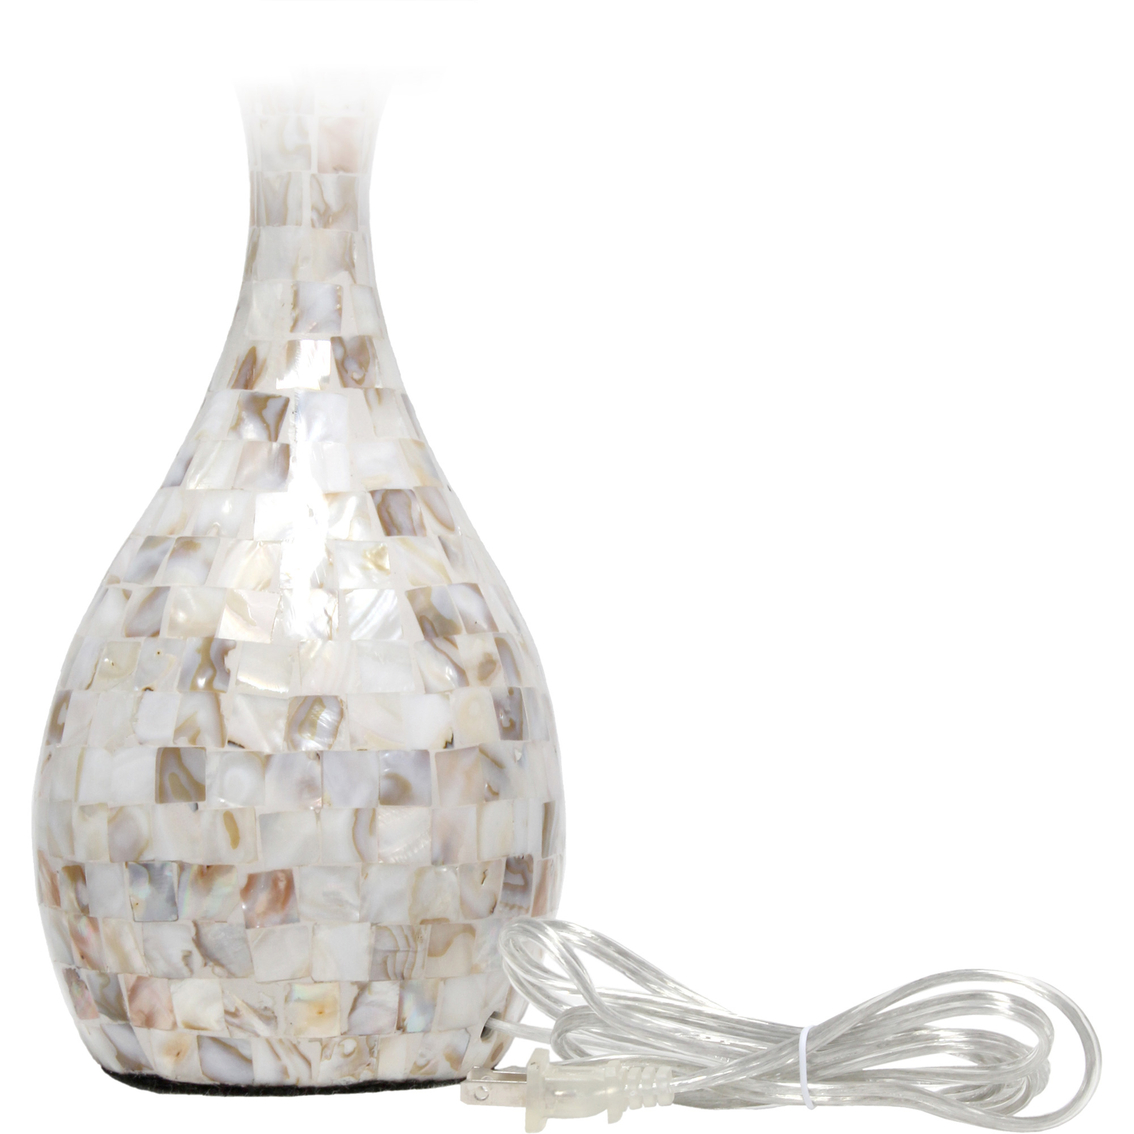 Lalia Home Malibu Curved Mosaic Seashell Table Lamp - Image 3 of 7